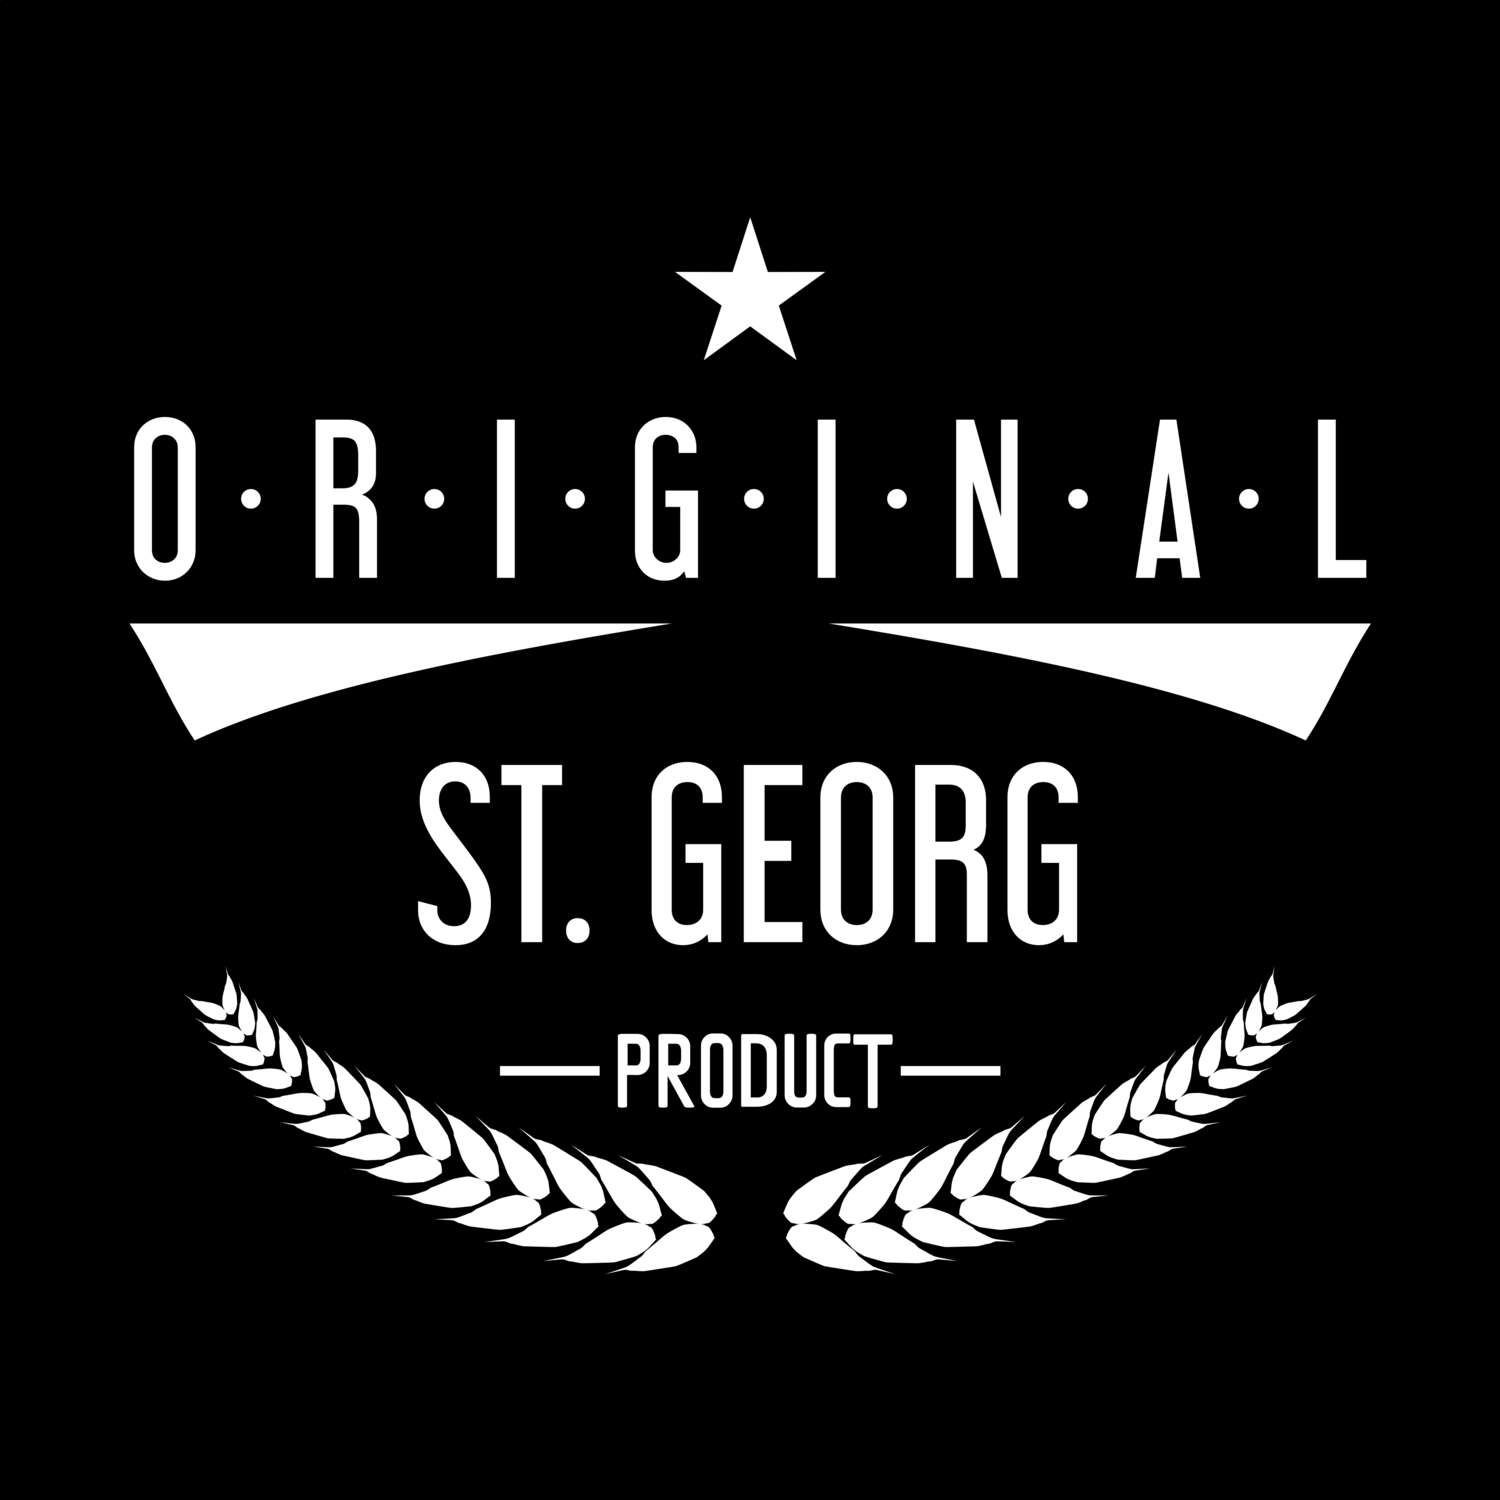 St. Georg T-Shirt »Original Product«